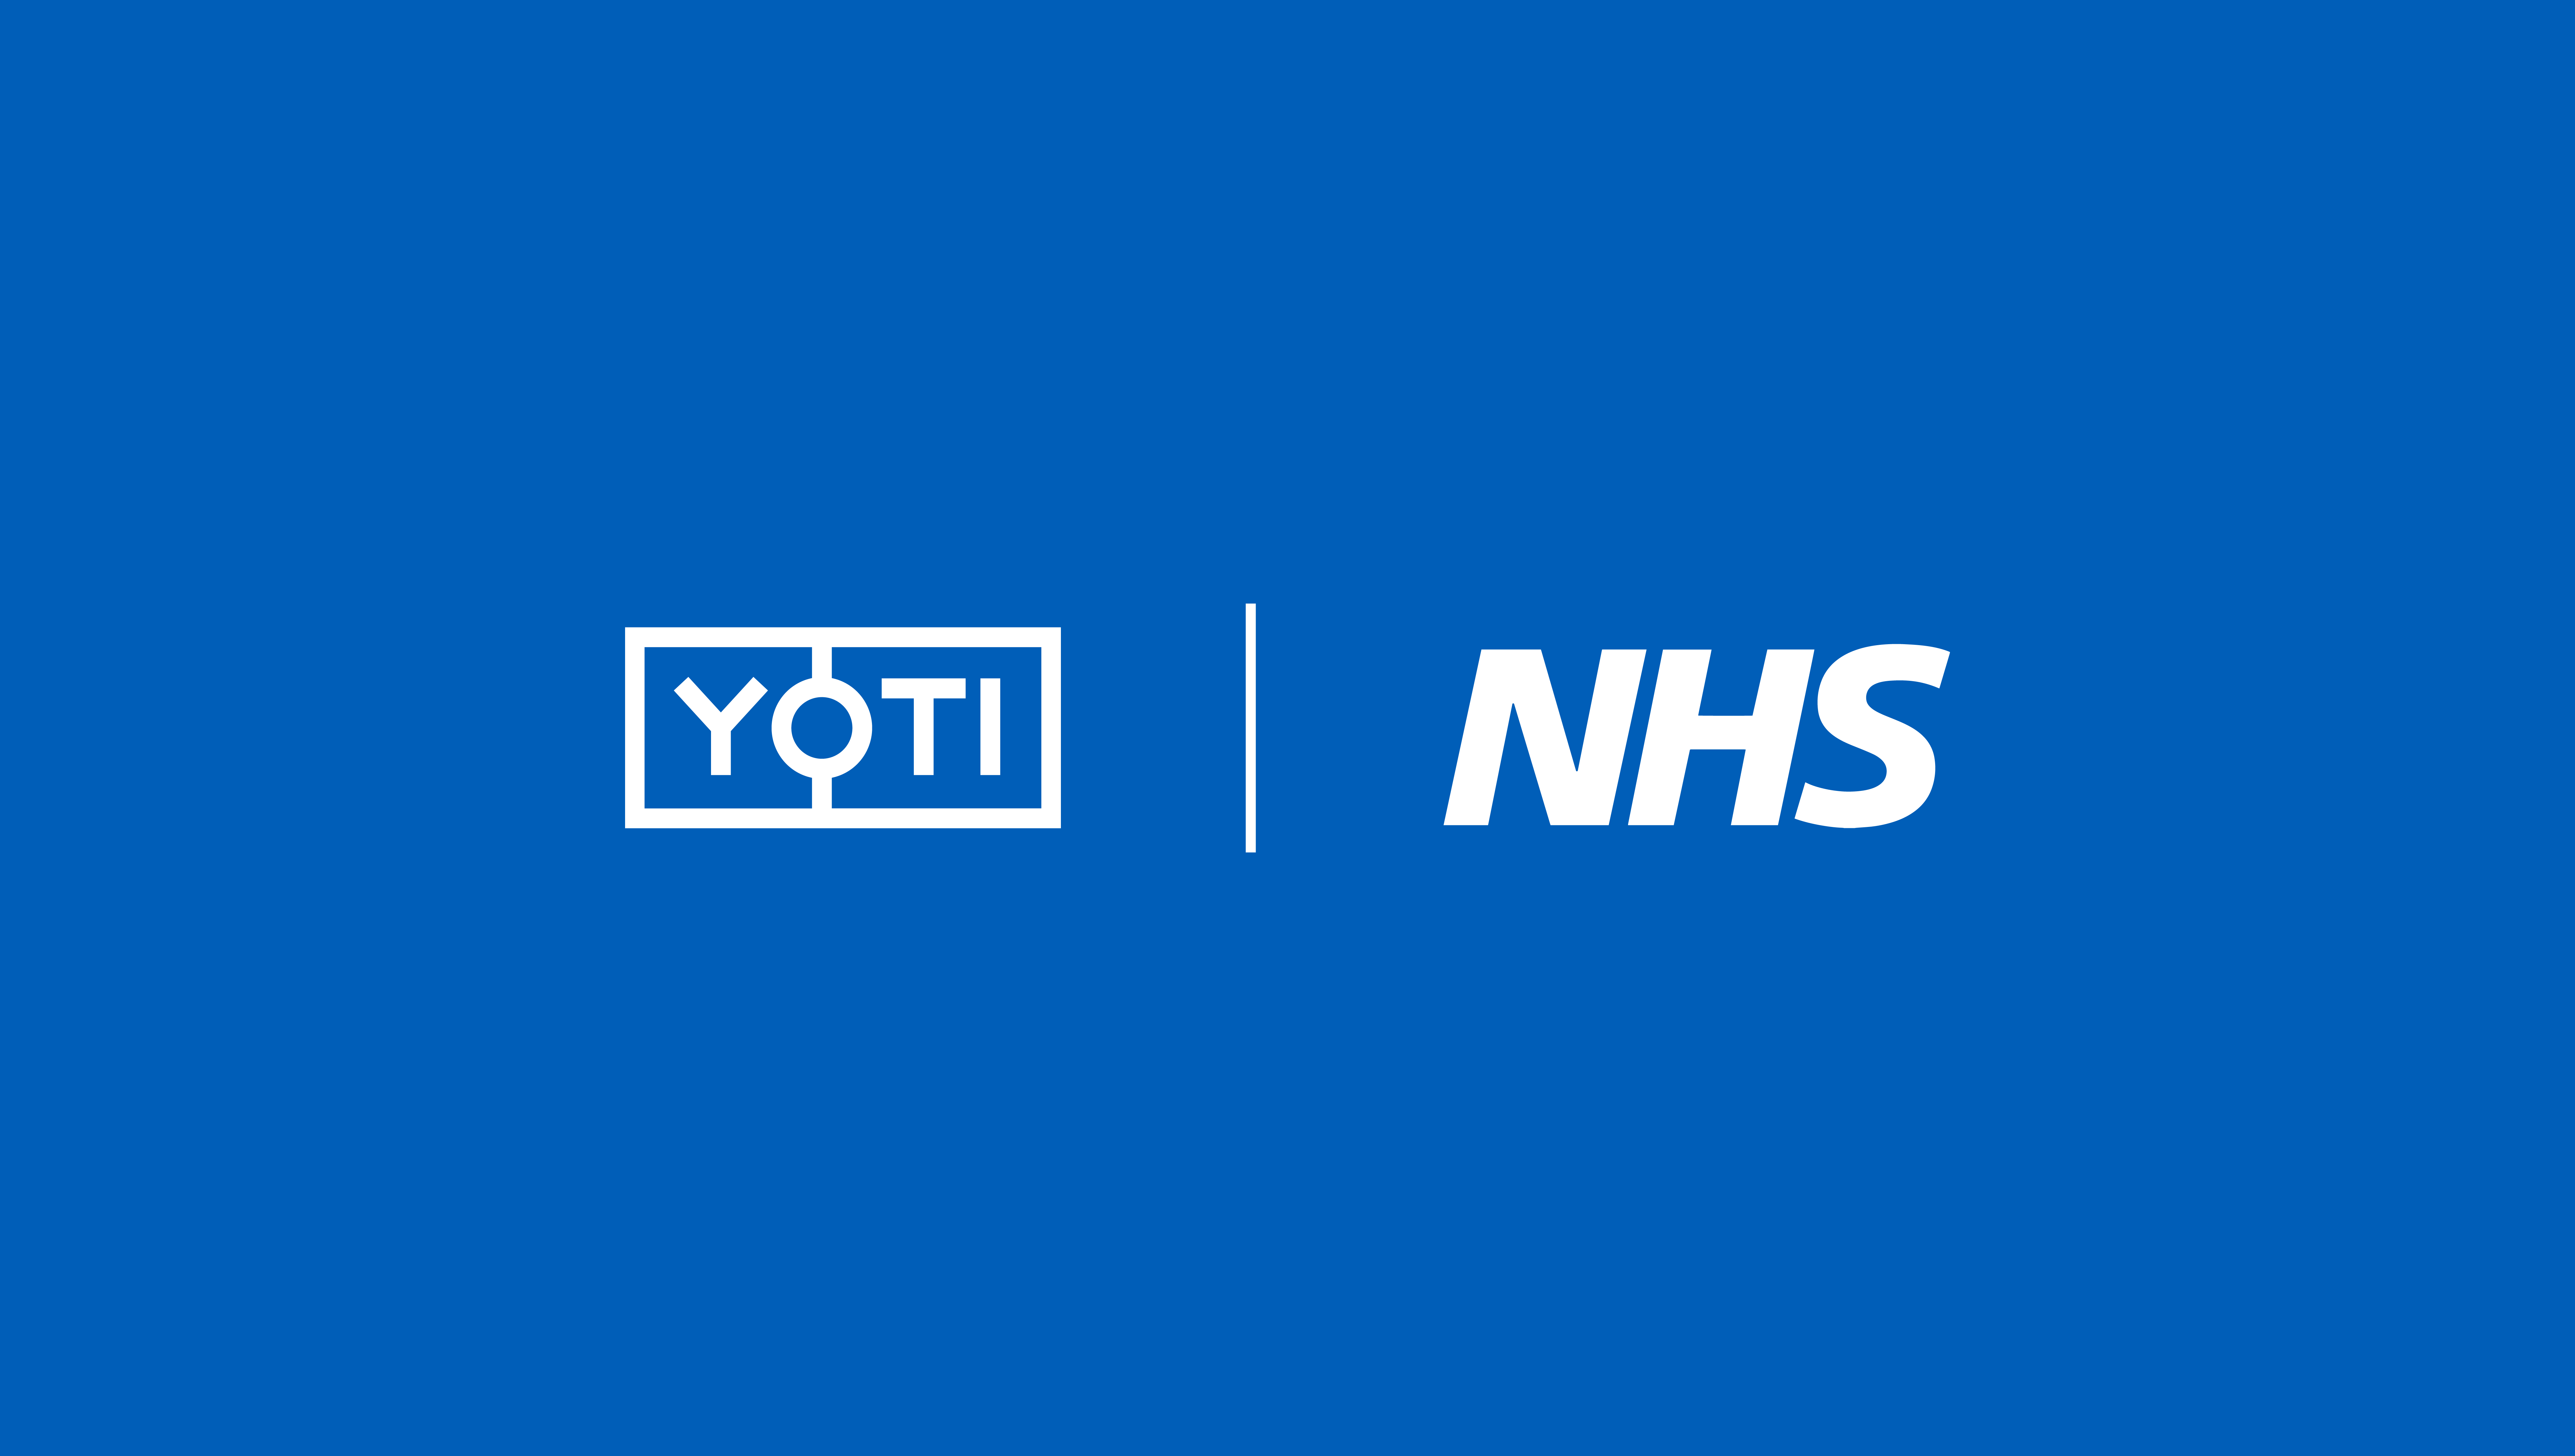 Yoti and NHS logos presented together